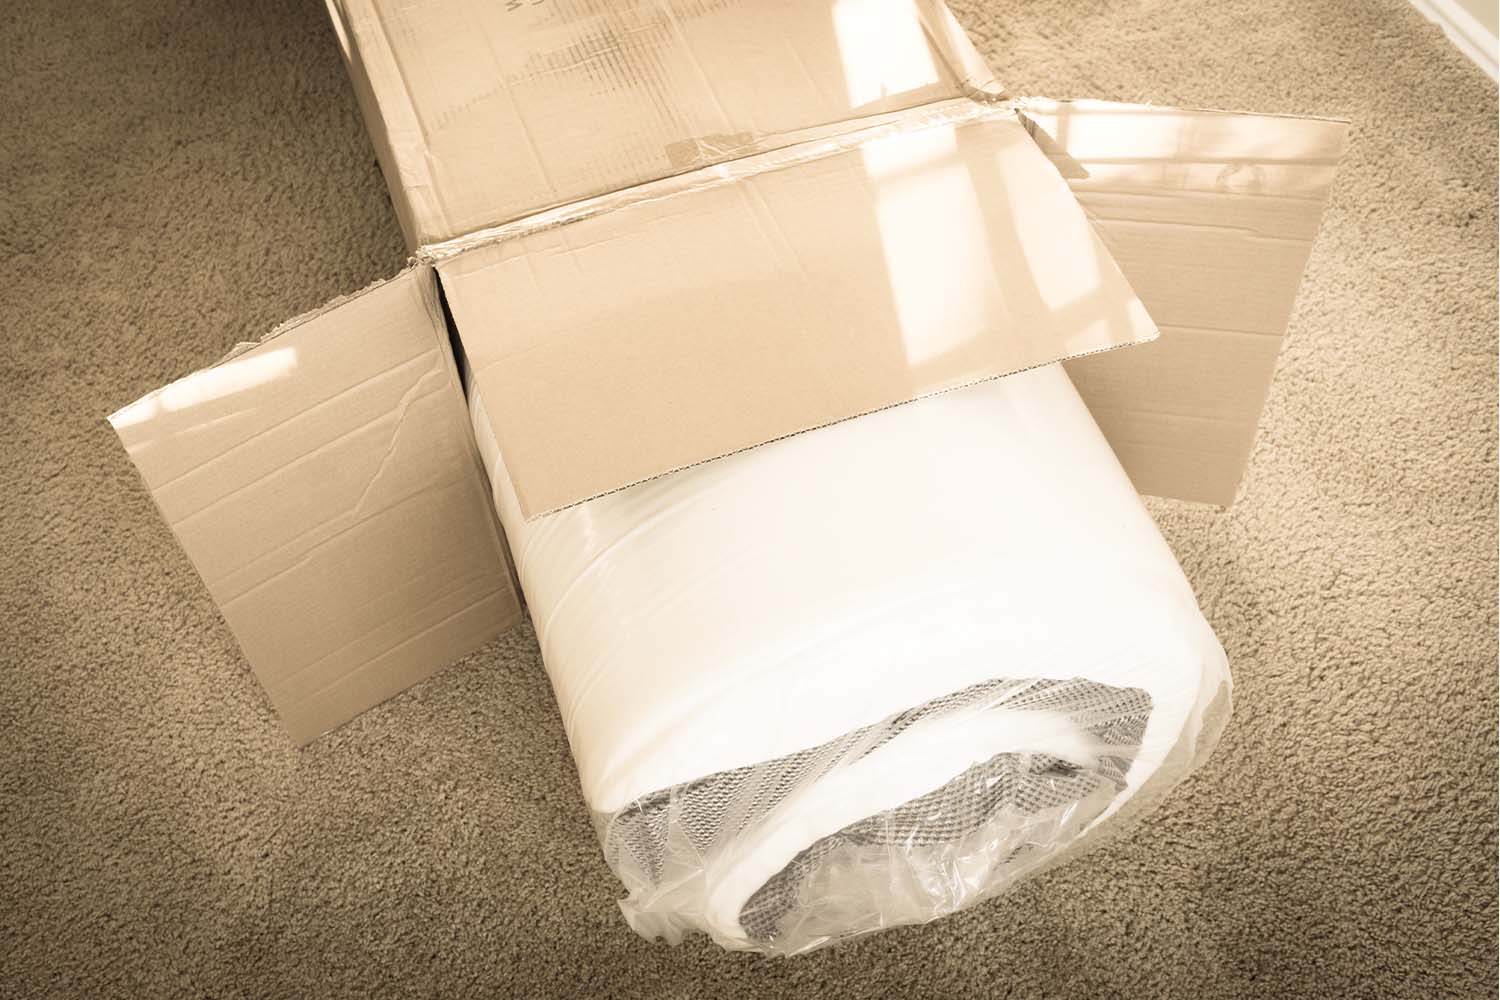 Large Foam Mattress Vacuum Storage Bags Seal Compressed Packing